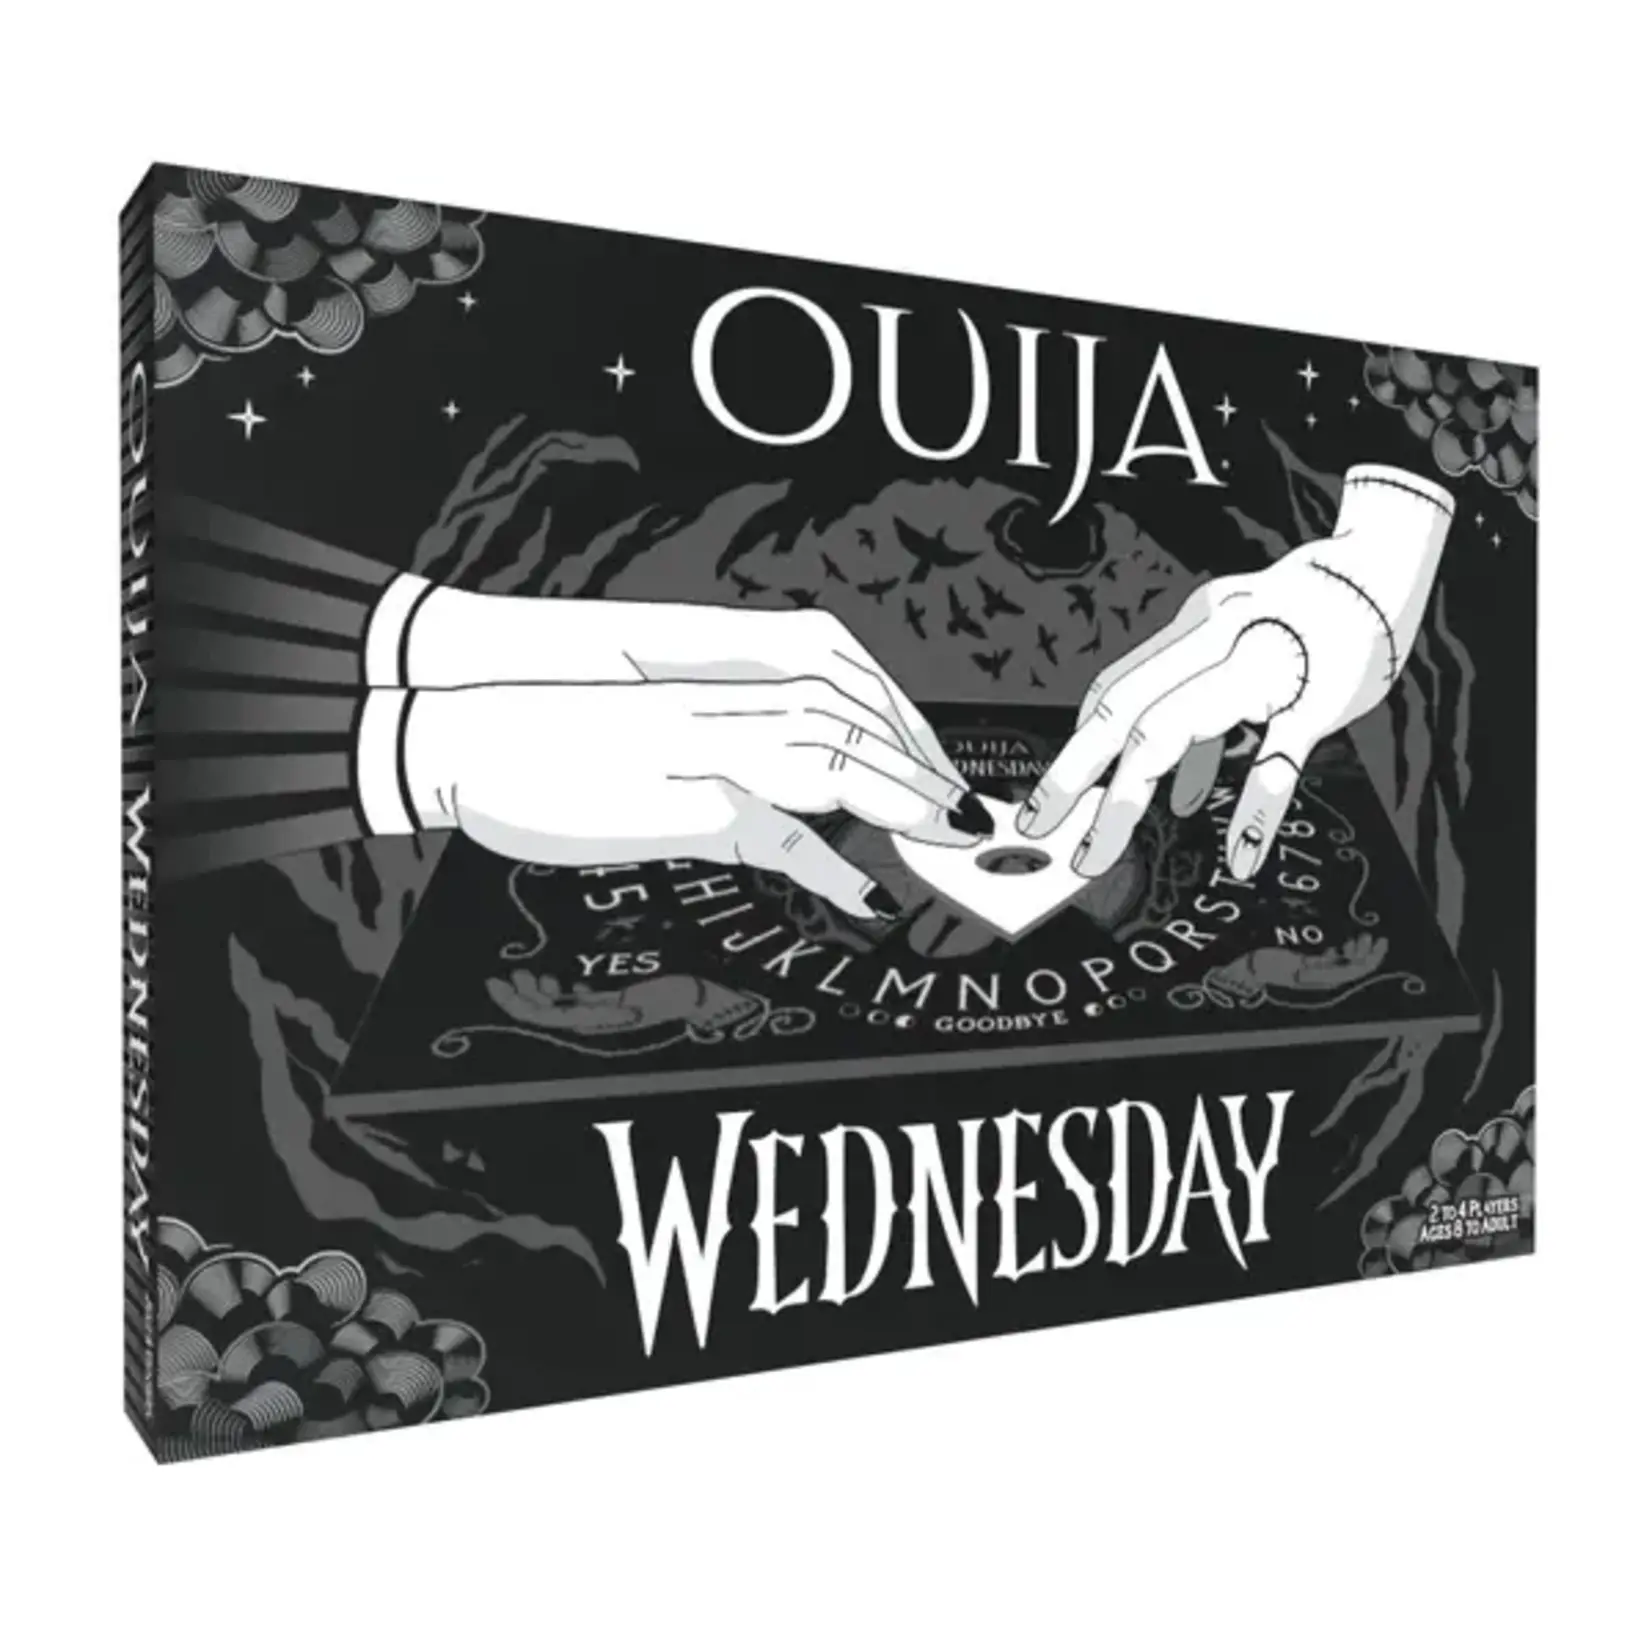 USAopoly Ouija Wednesday